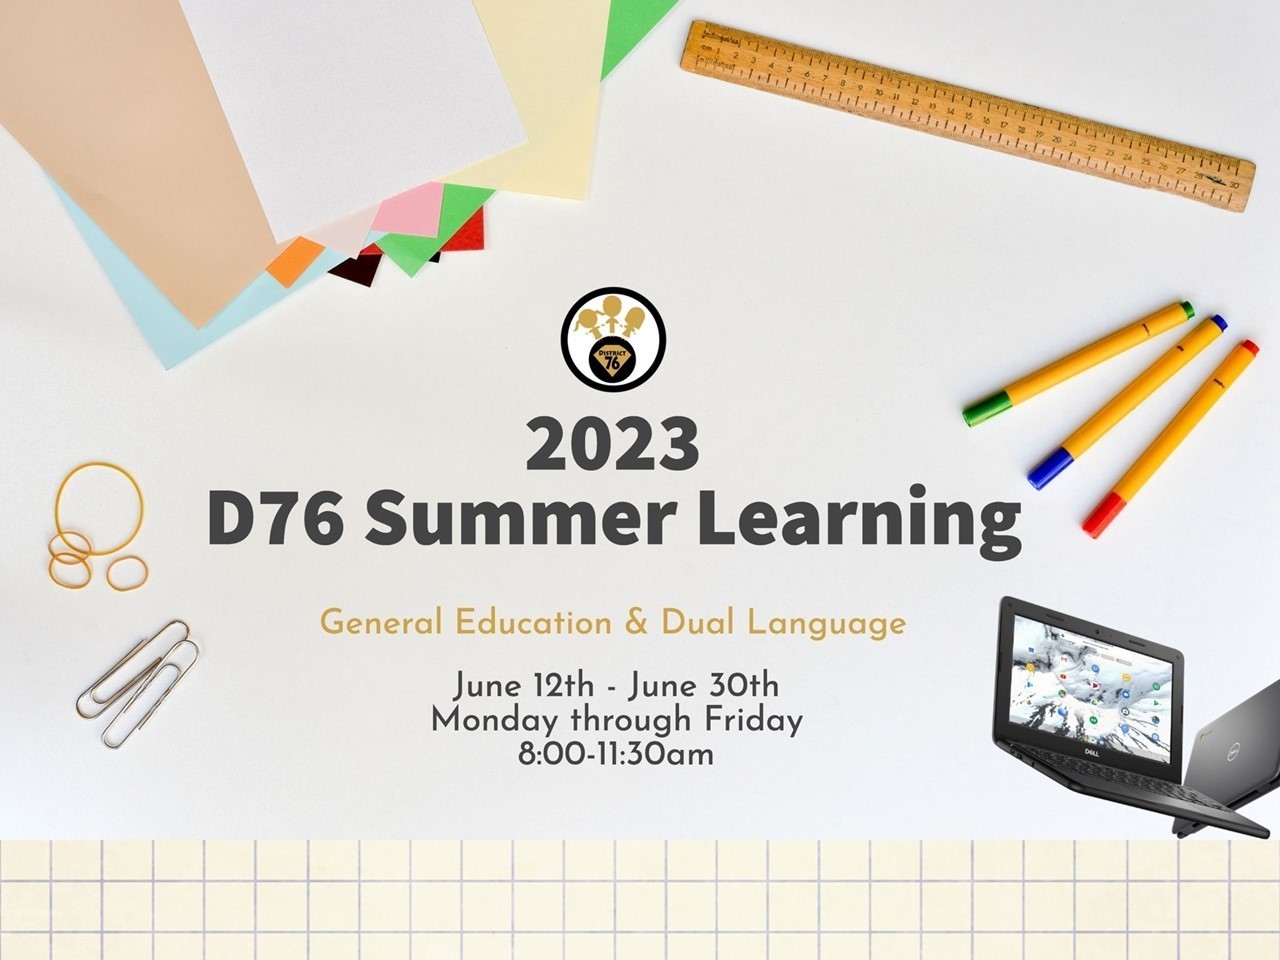 D76 Summer Learning